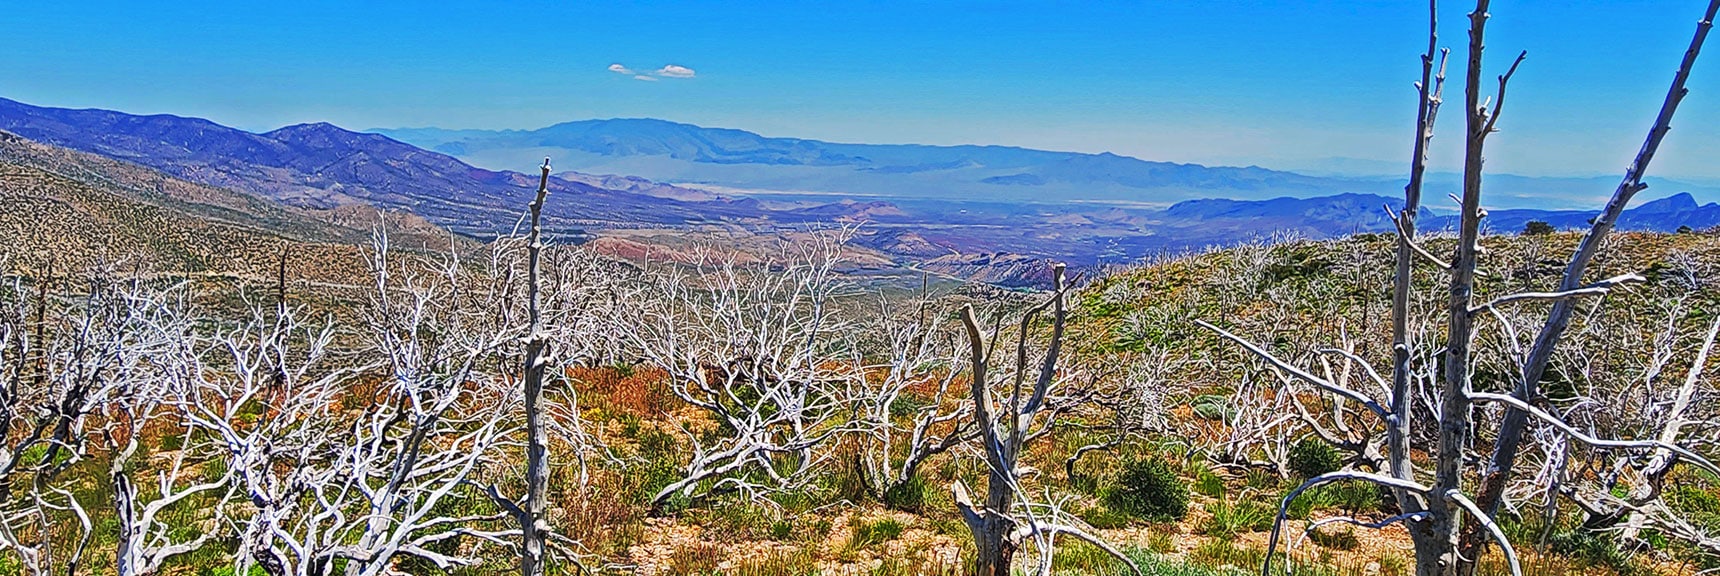 Distant Sheep Range, Gass Peak and North Las Vegas Valley from Wilson Ridge Trail. | Wilson Ridge to Harris Mountain | Lovell Canyon, Nevada